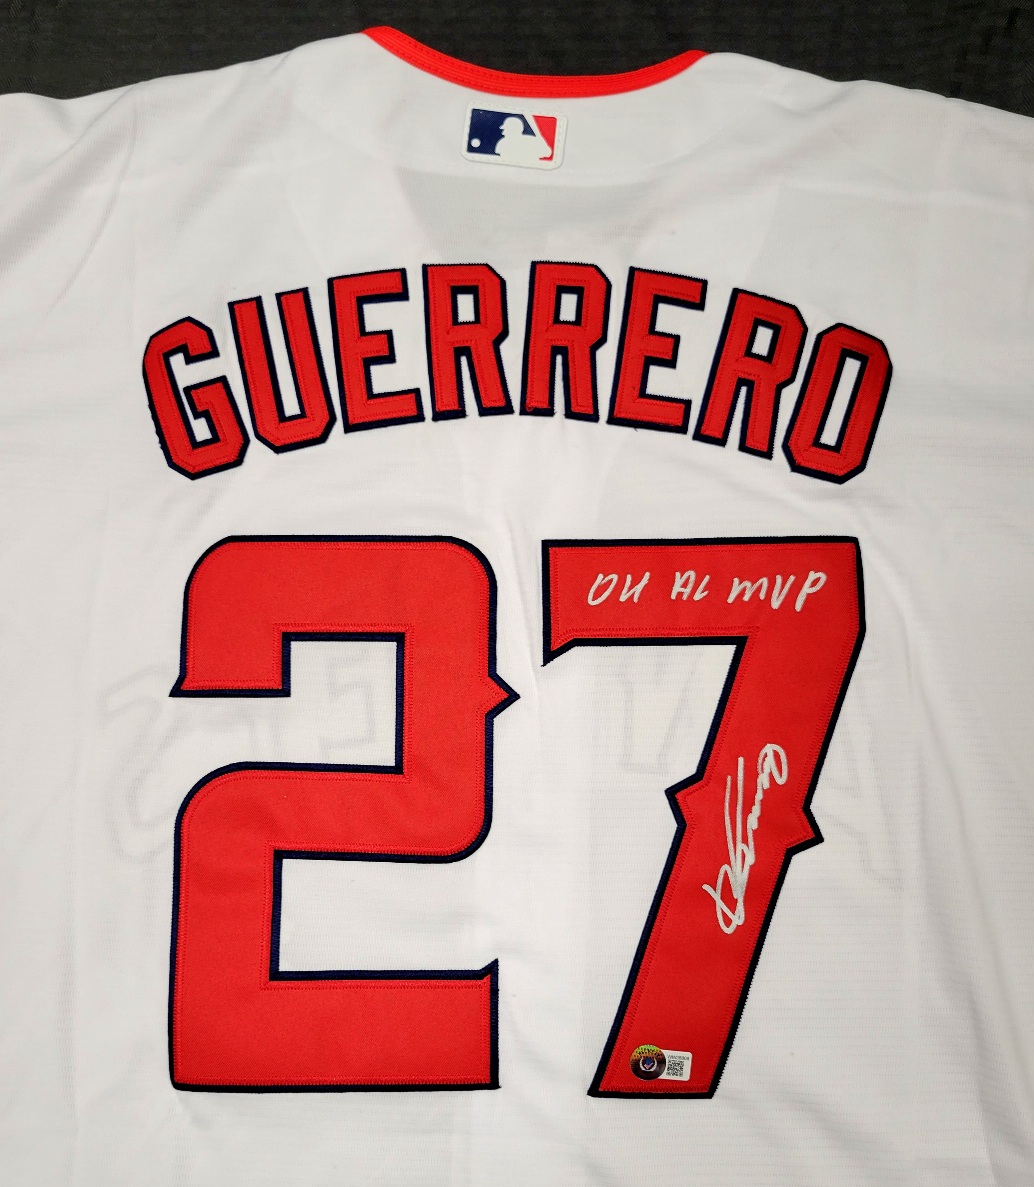 Vladimir Guerrero signed Angels jersey w/ “04 AL MVP” inscription